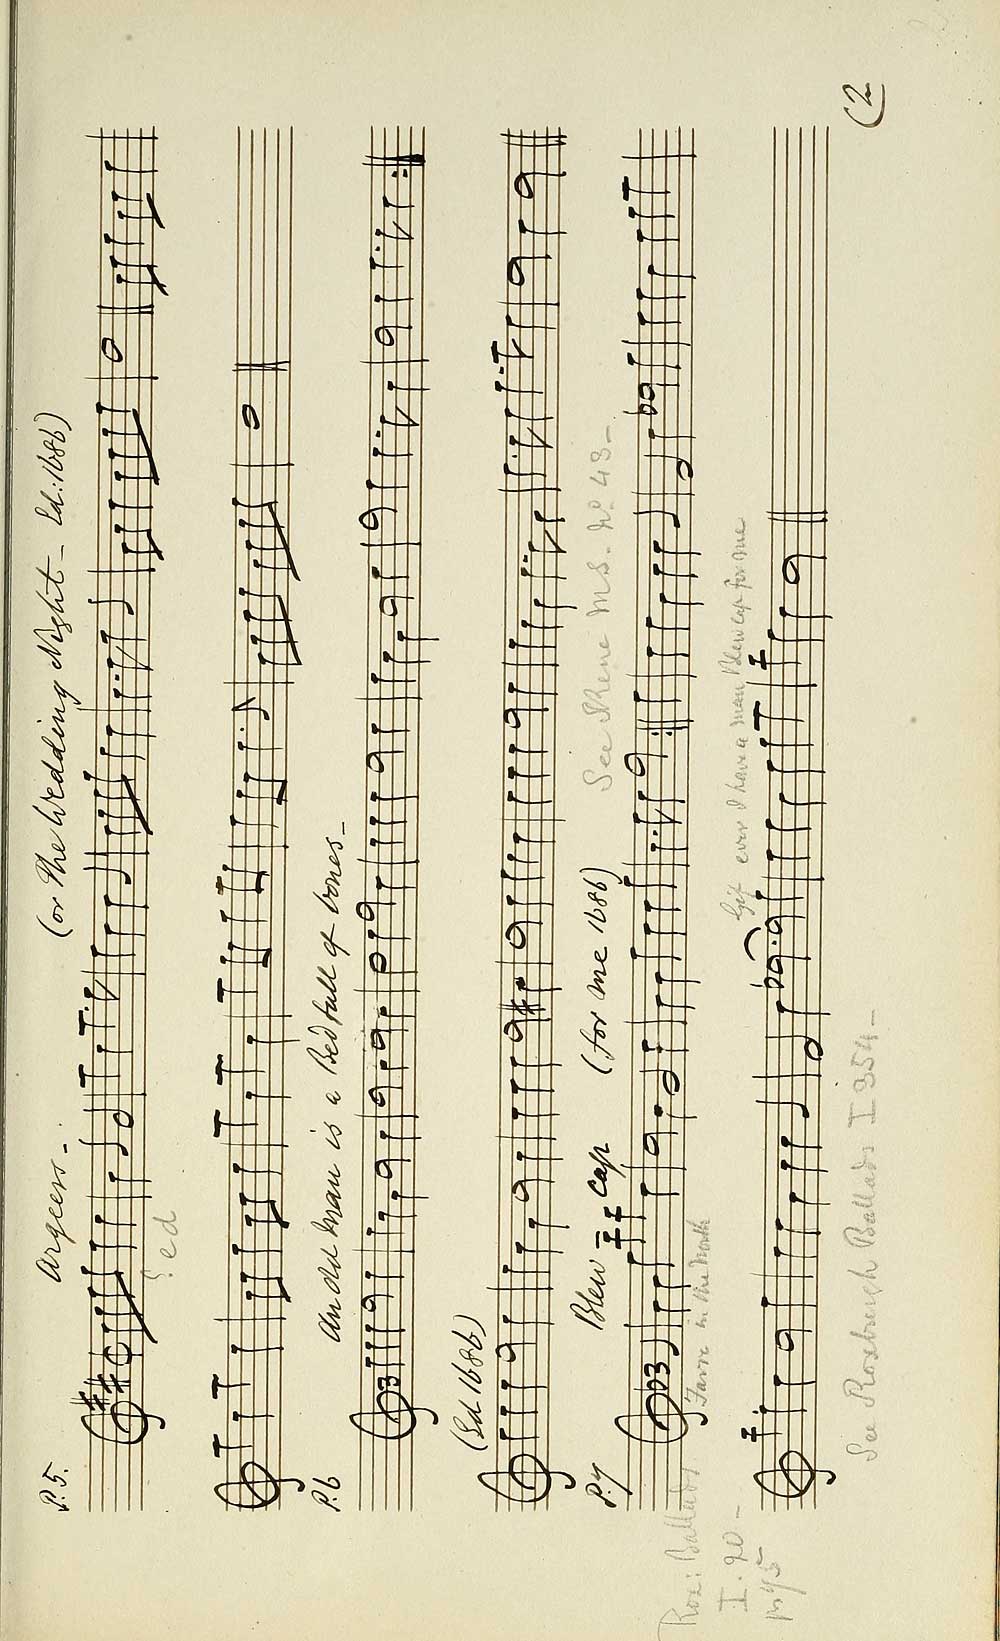 orchestral sheet music manuscript